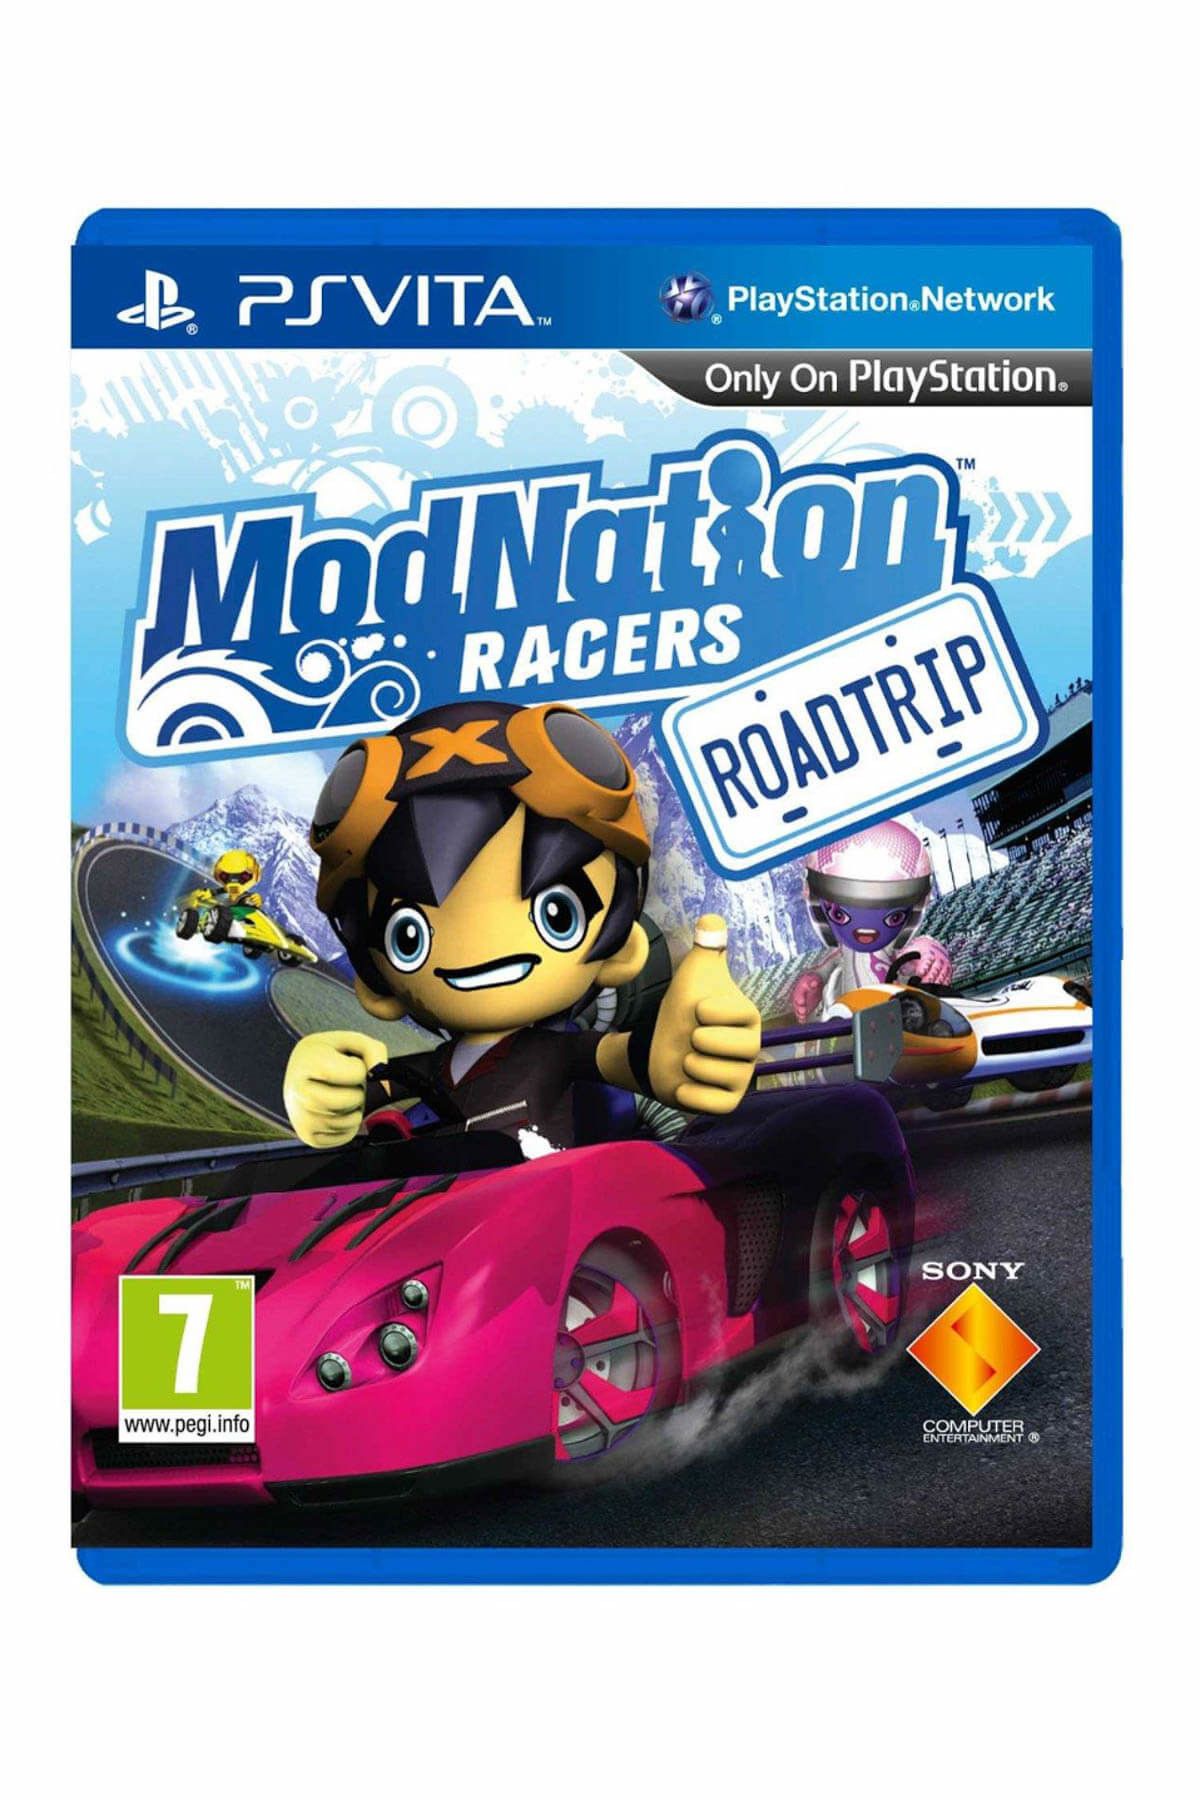 Sony Ps Vita Modnation Racers Roadtrip